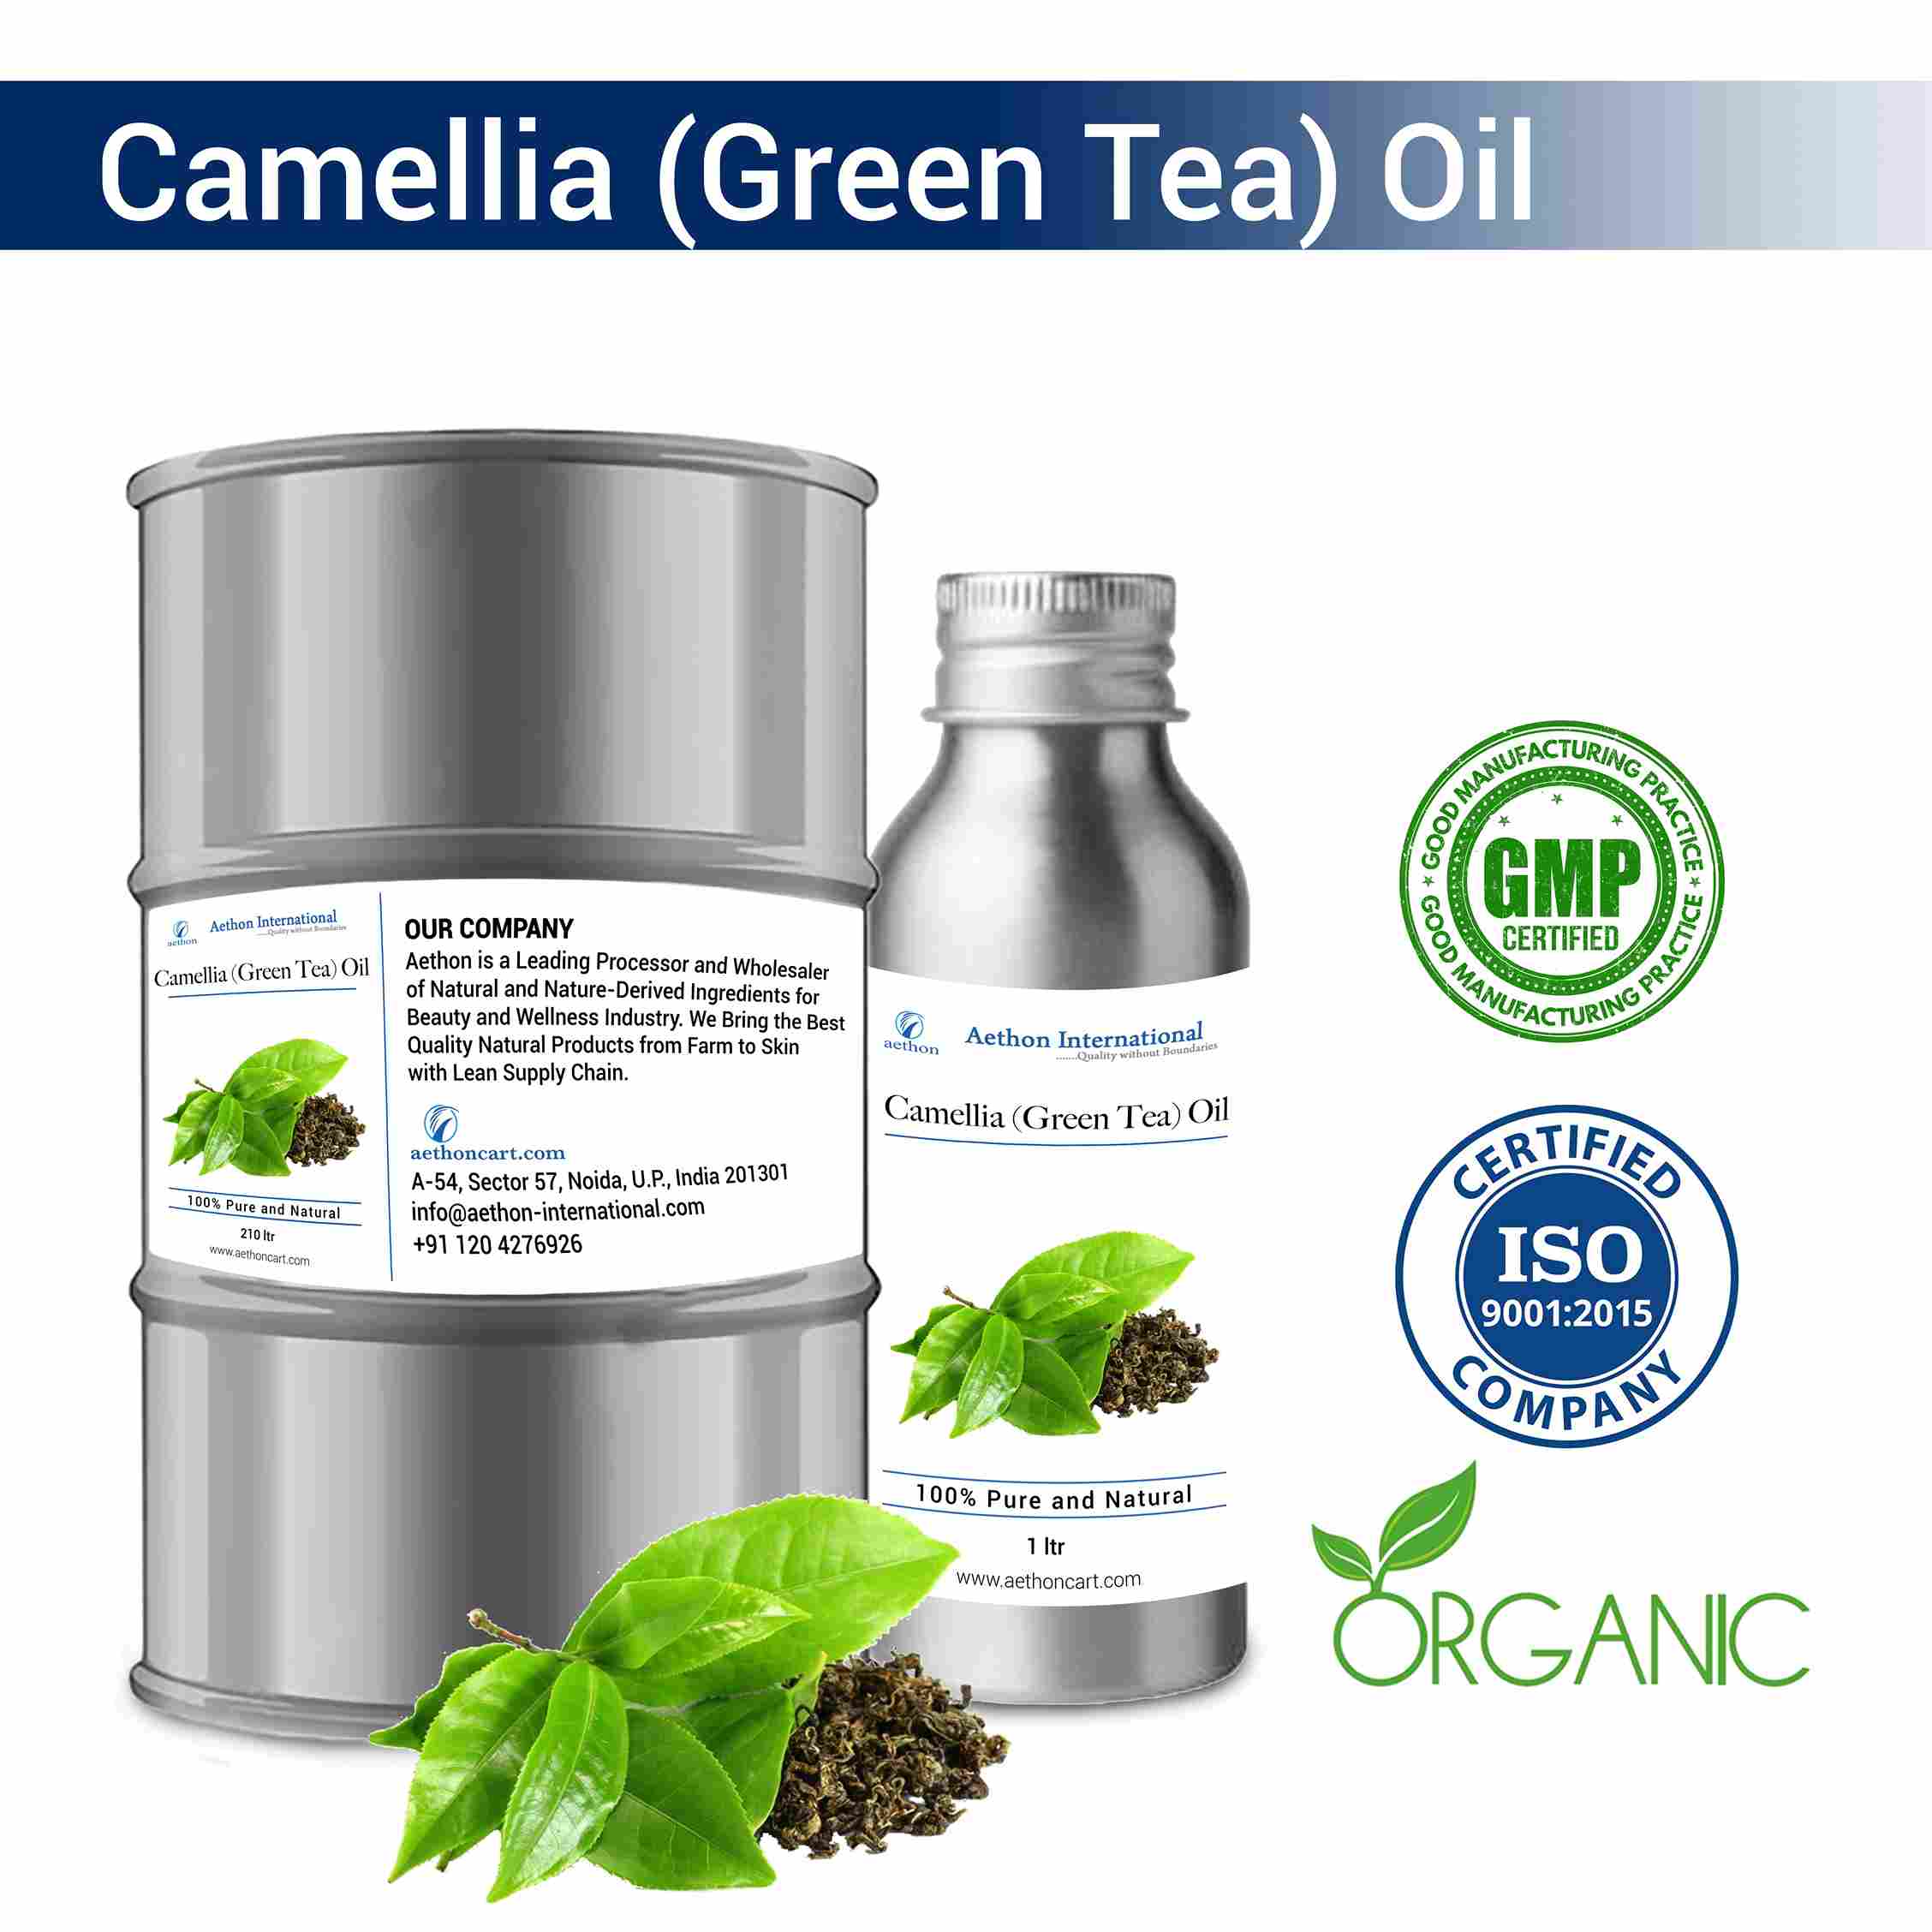 Camellia (Green Tea) Oil